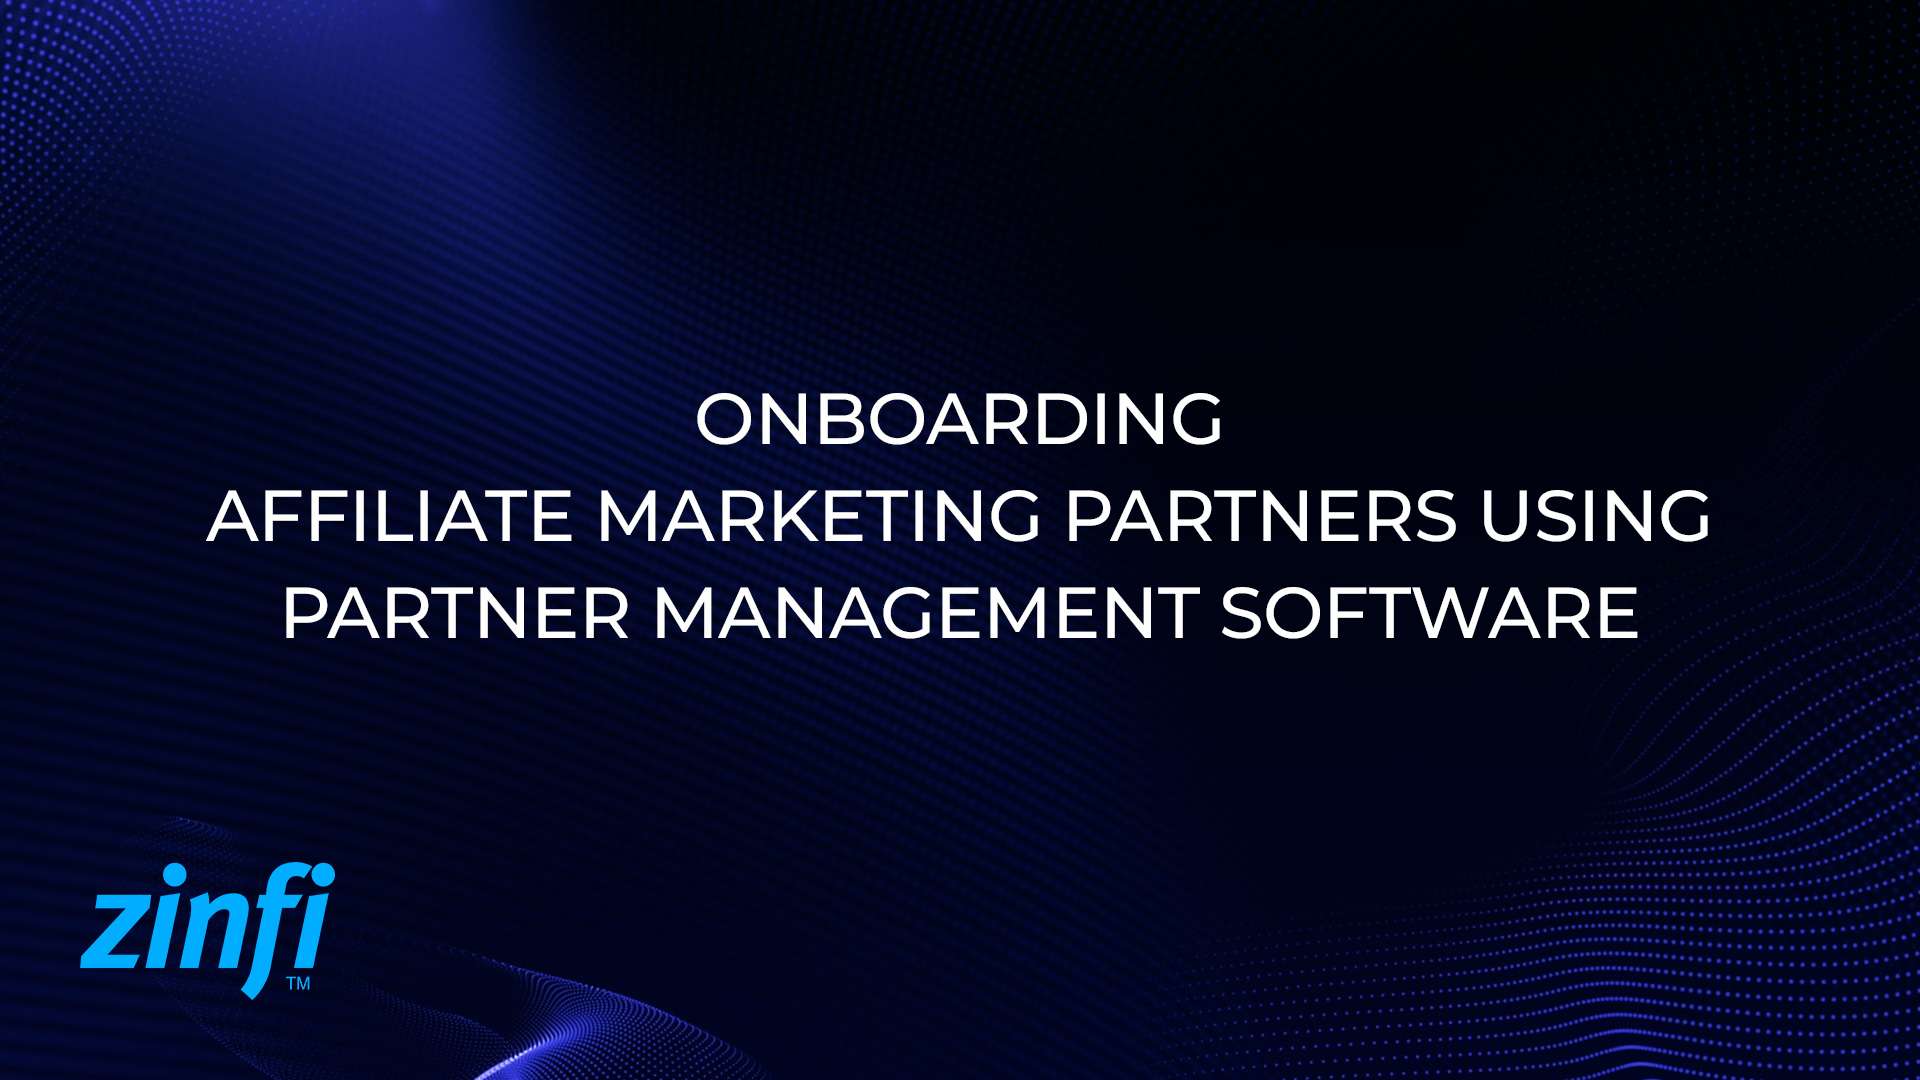 Onboarding Affiliate Marketing Partners Using Partner Management Software